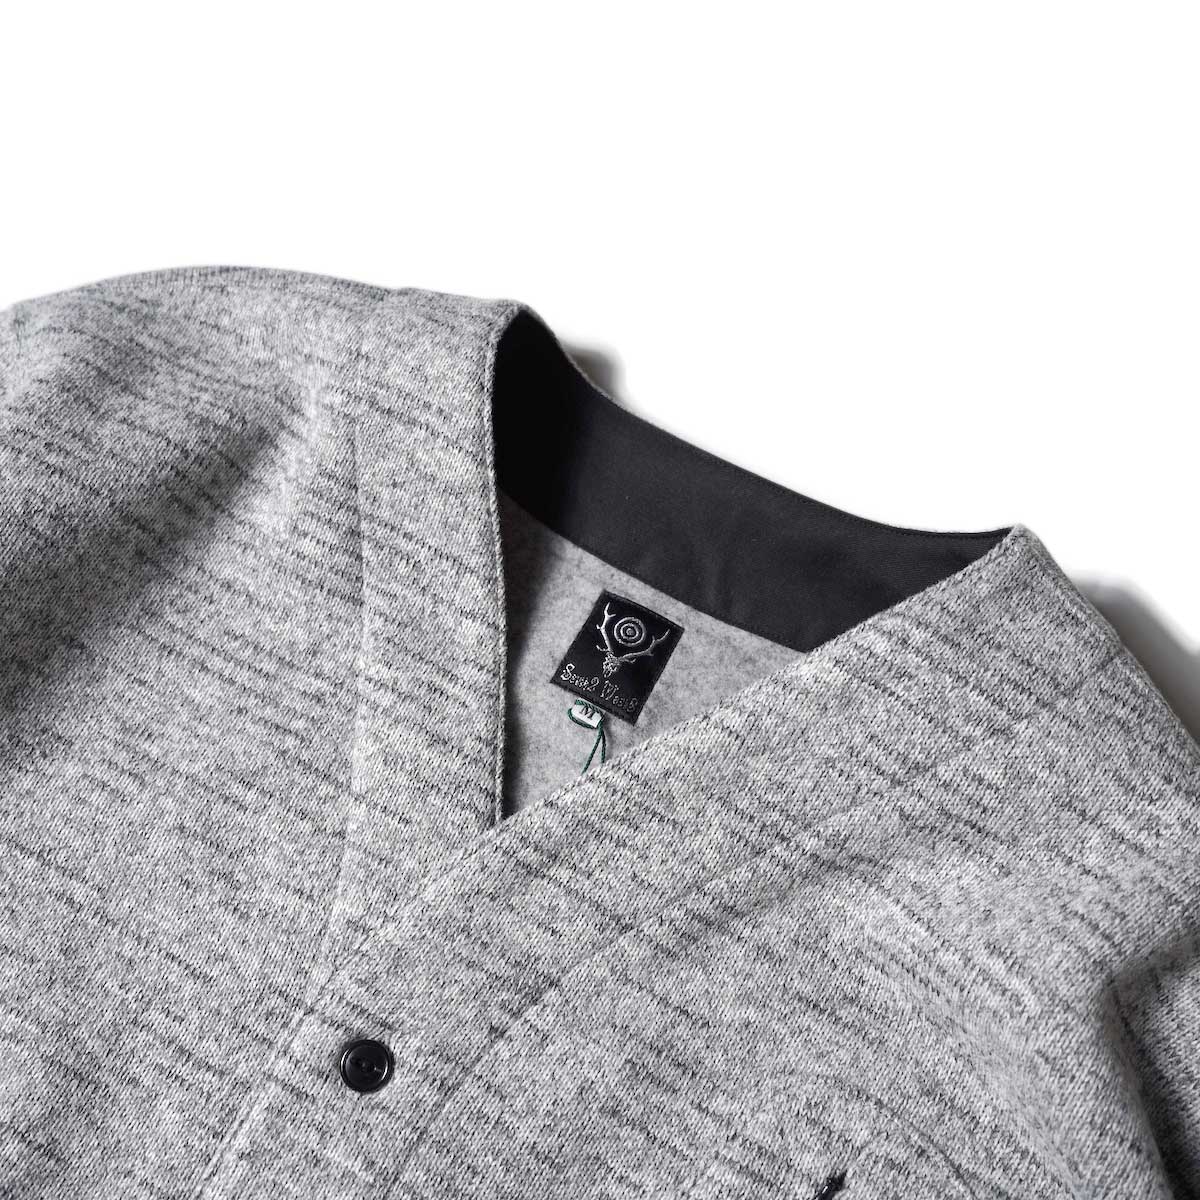 South2 West8 / Scouting Shirt - POLARTEC Fleece Lined Jersey (Grey)襟